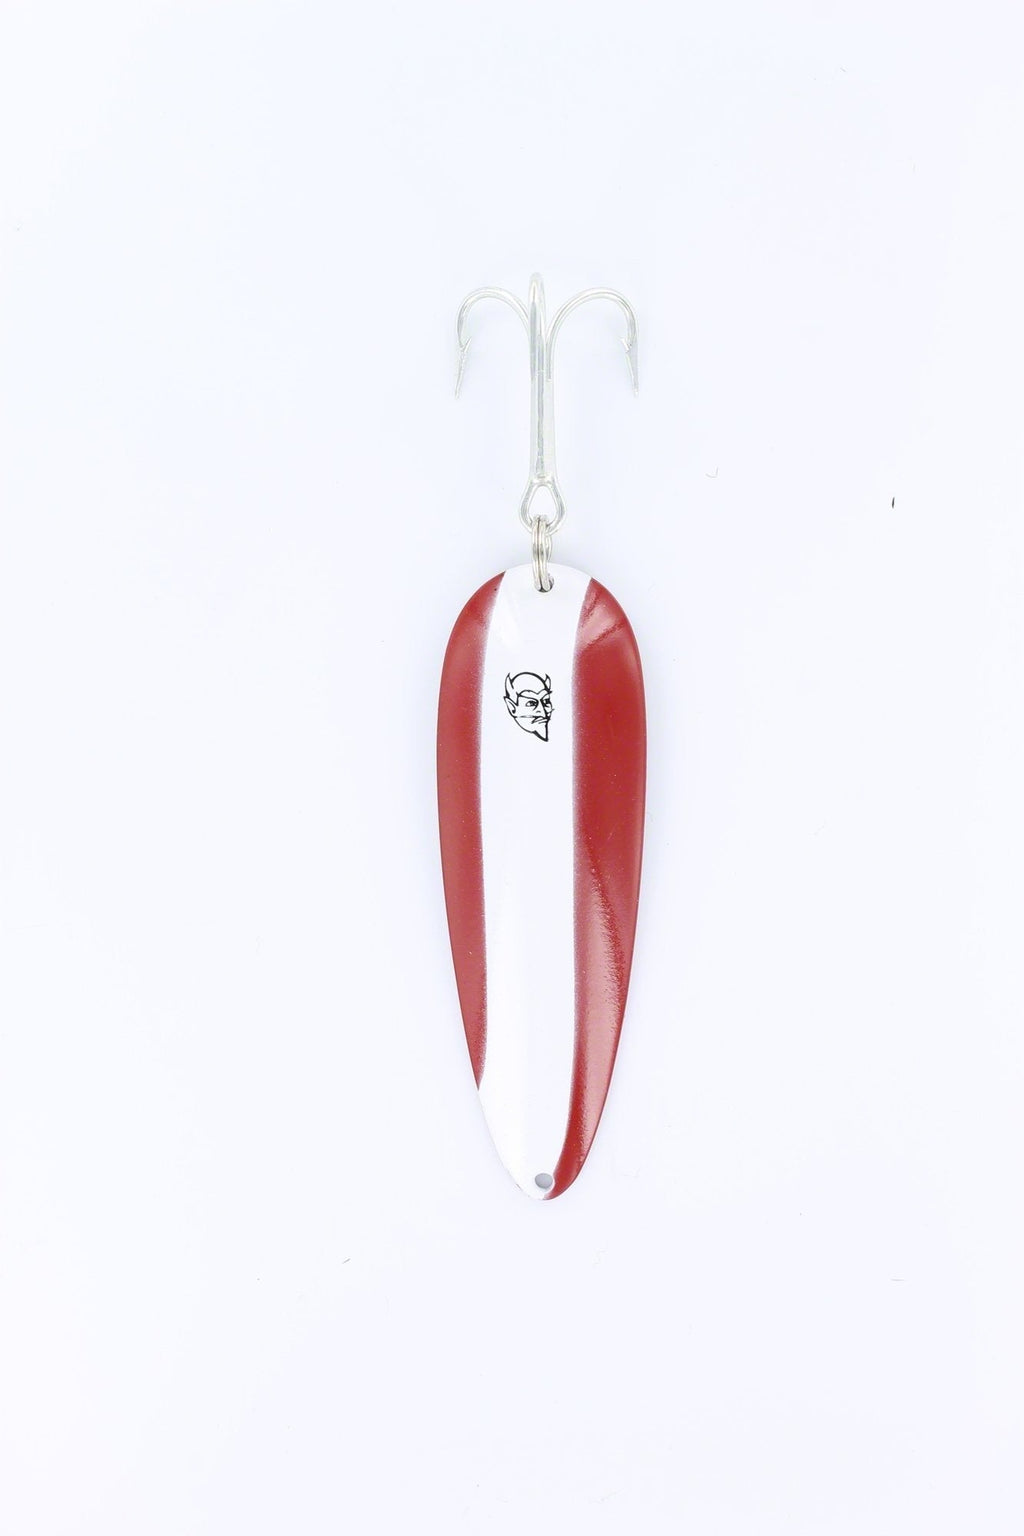 [AUSTRALIA] - Original Dardevle Spoons (Red/White, 1 Ounce) 